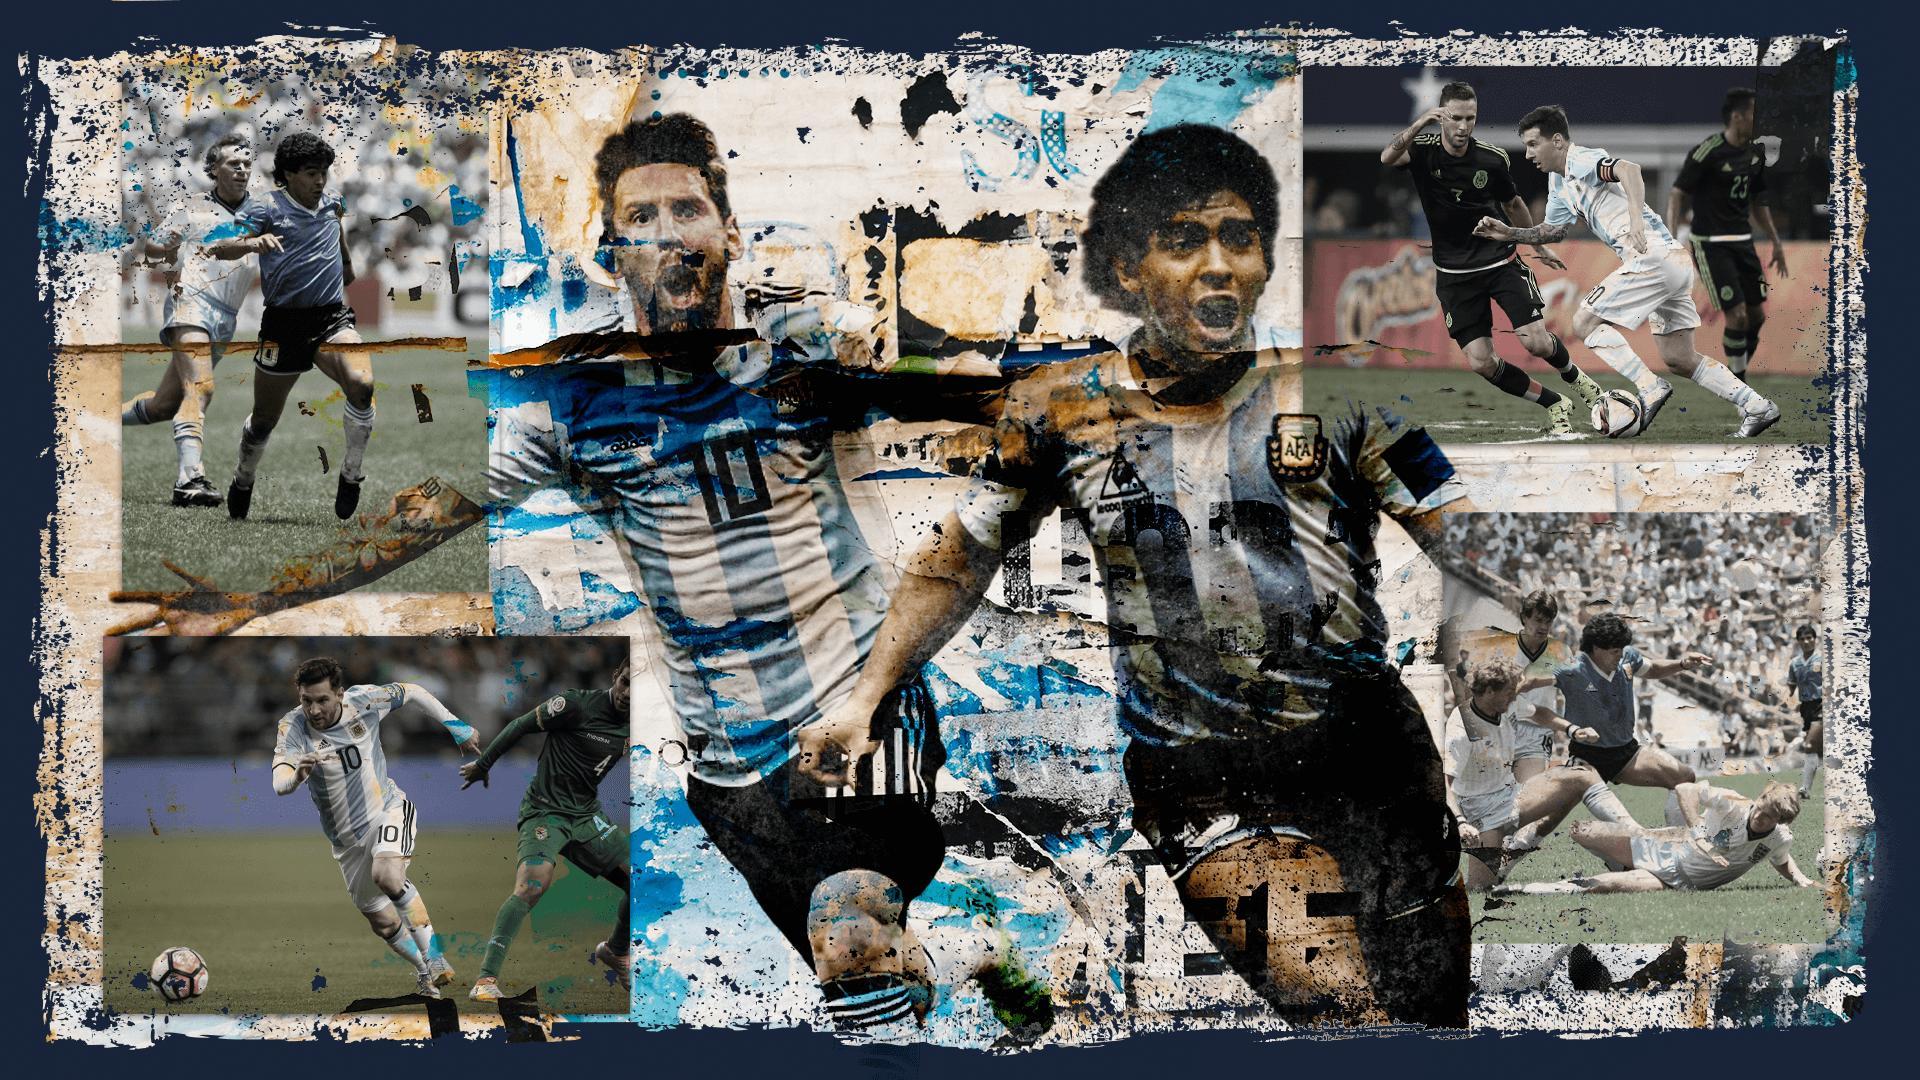 Pele Y Maradona wallpaper by NicoPerez913 - Download on ZEDGE™